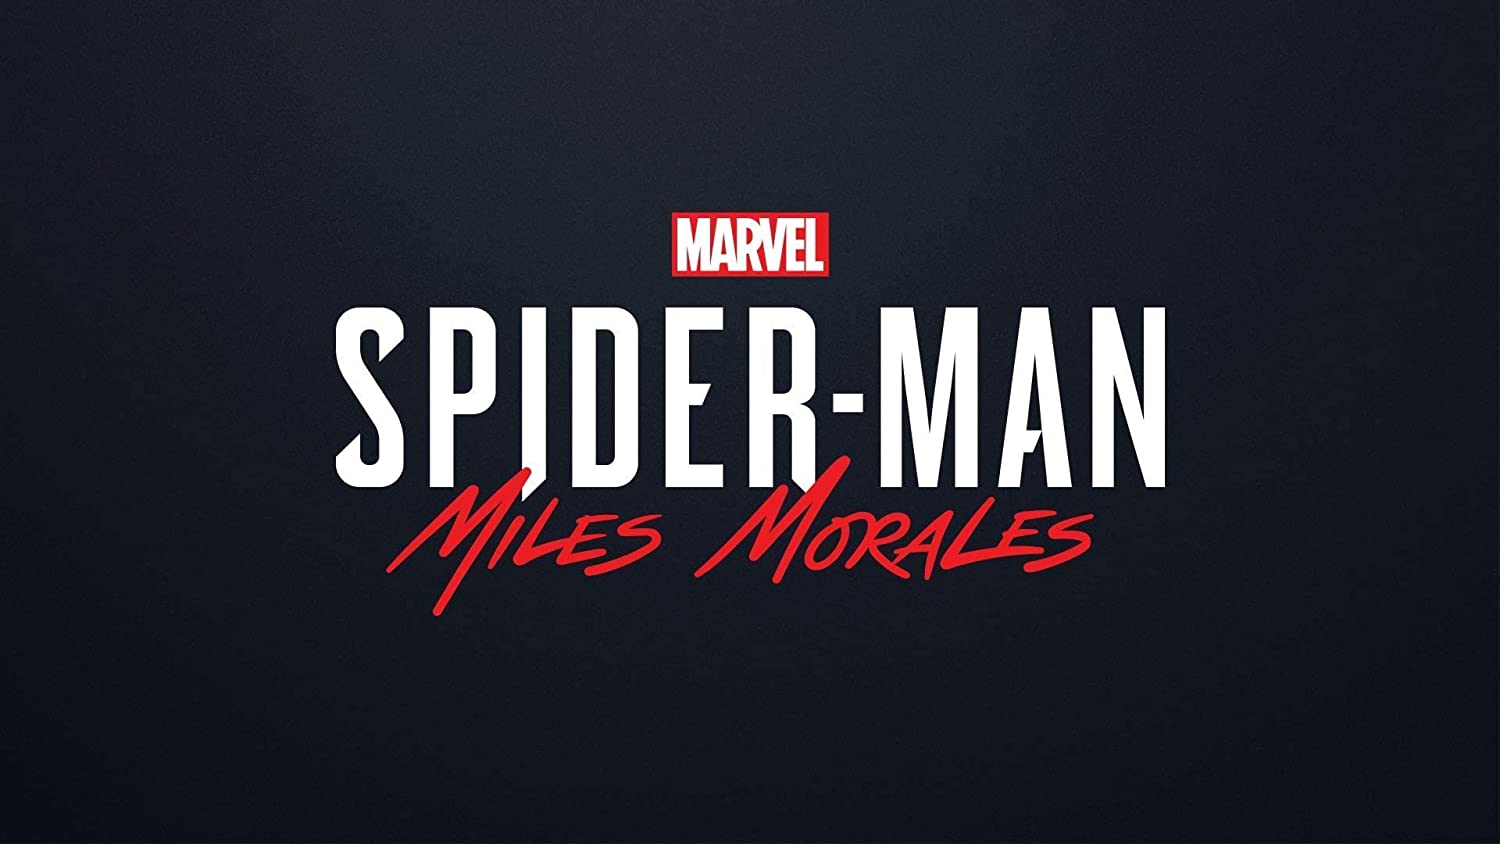 PS5 Game - Spiderman: Miles Morales CD Game